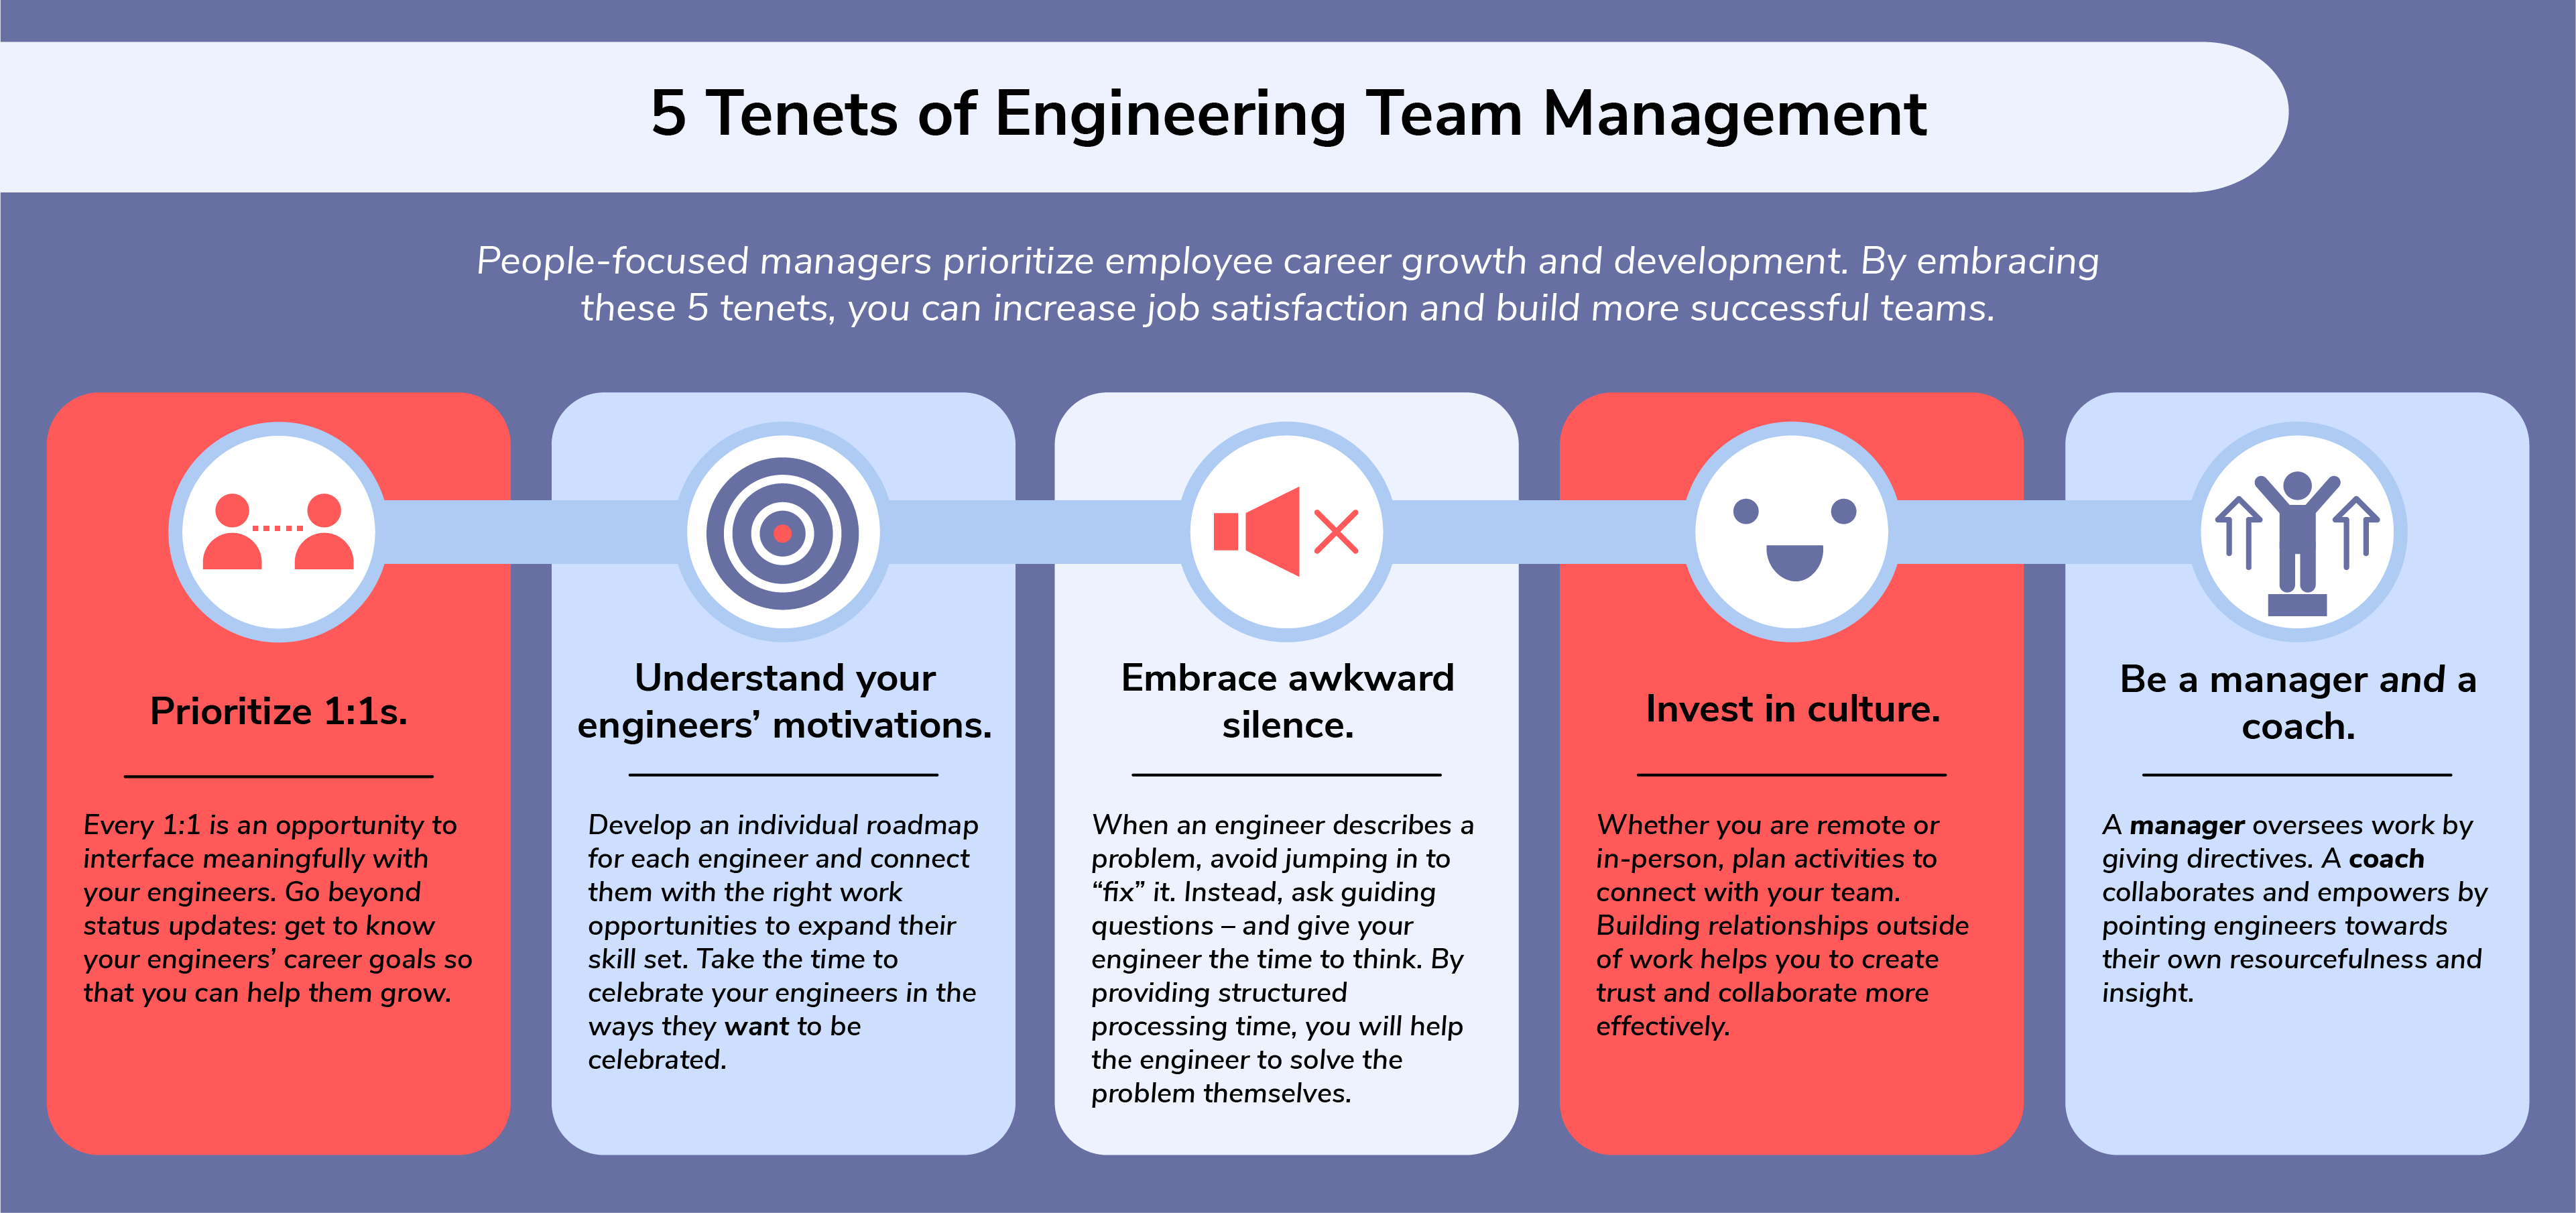 5 Tenets of Engineering Team Management